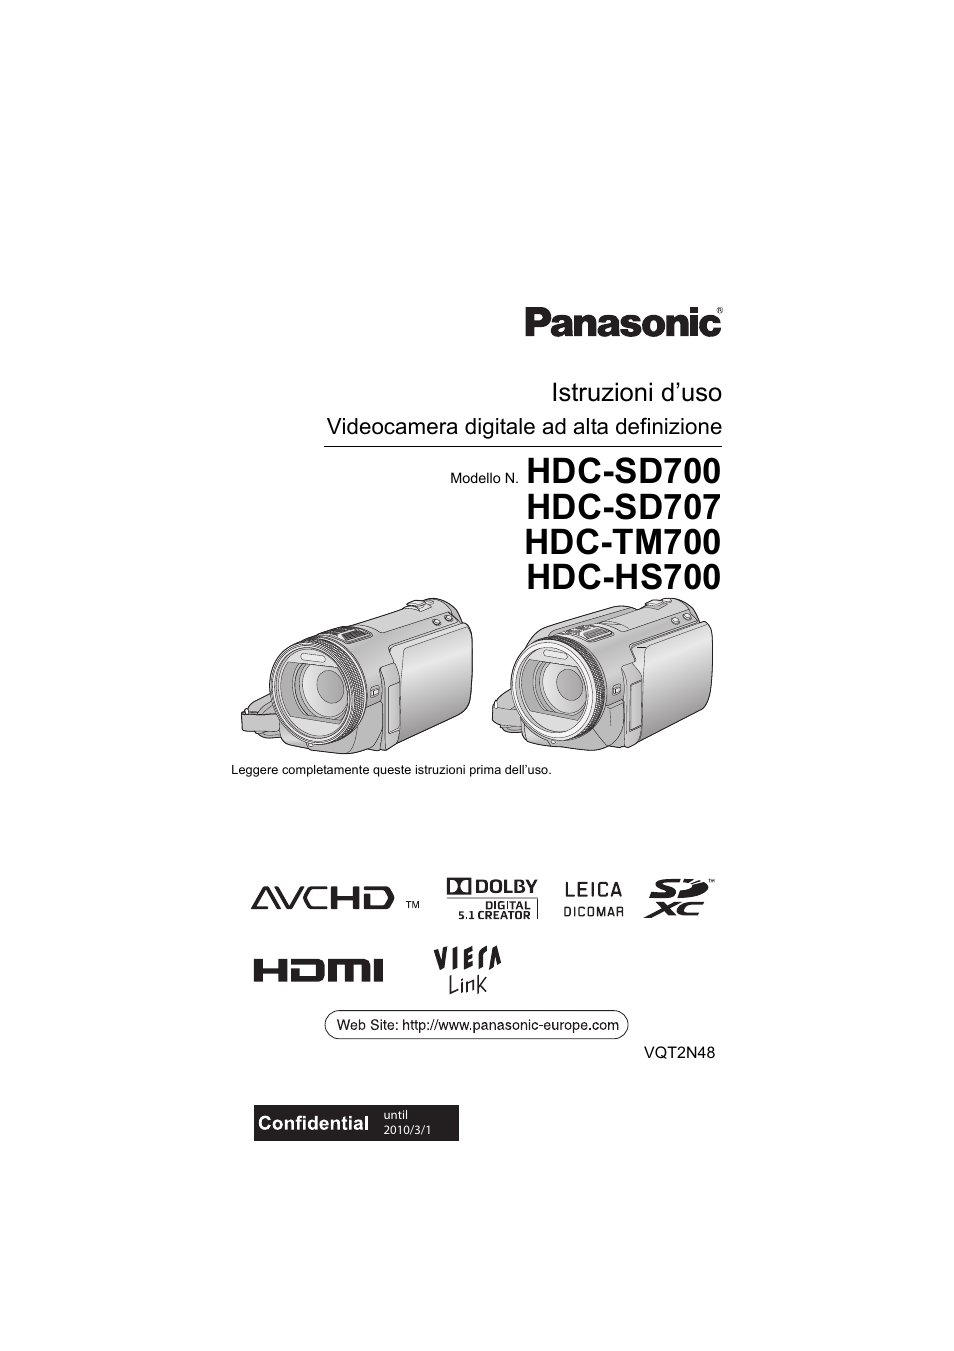 Panasonic HDCTM700 Manuale d'uso | Pagine: 152